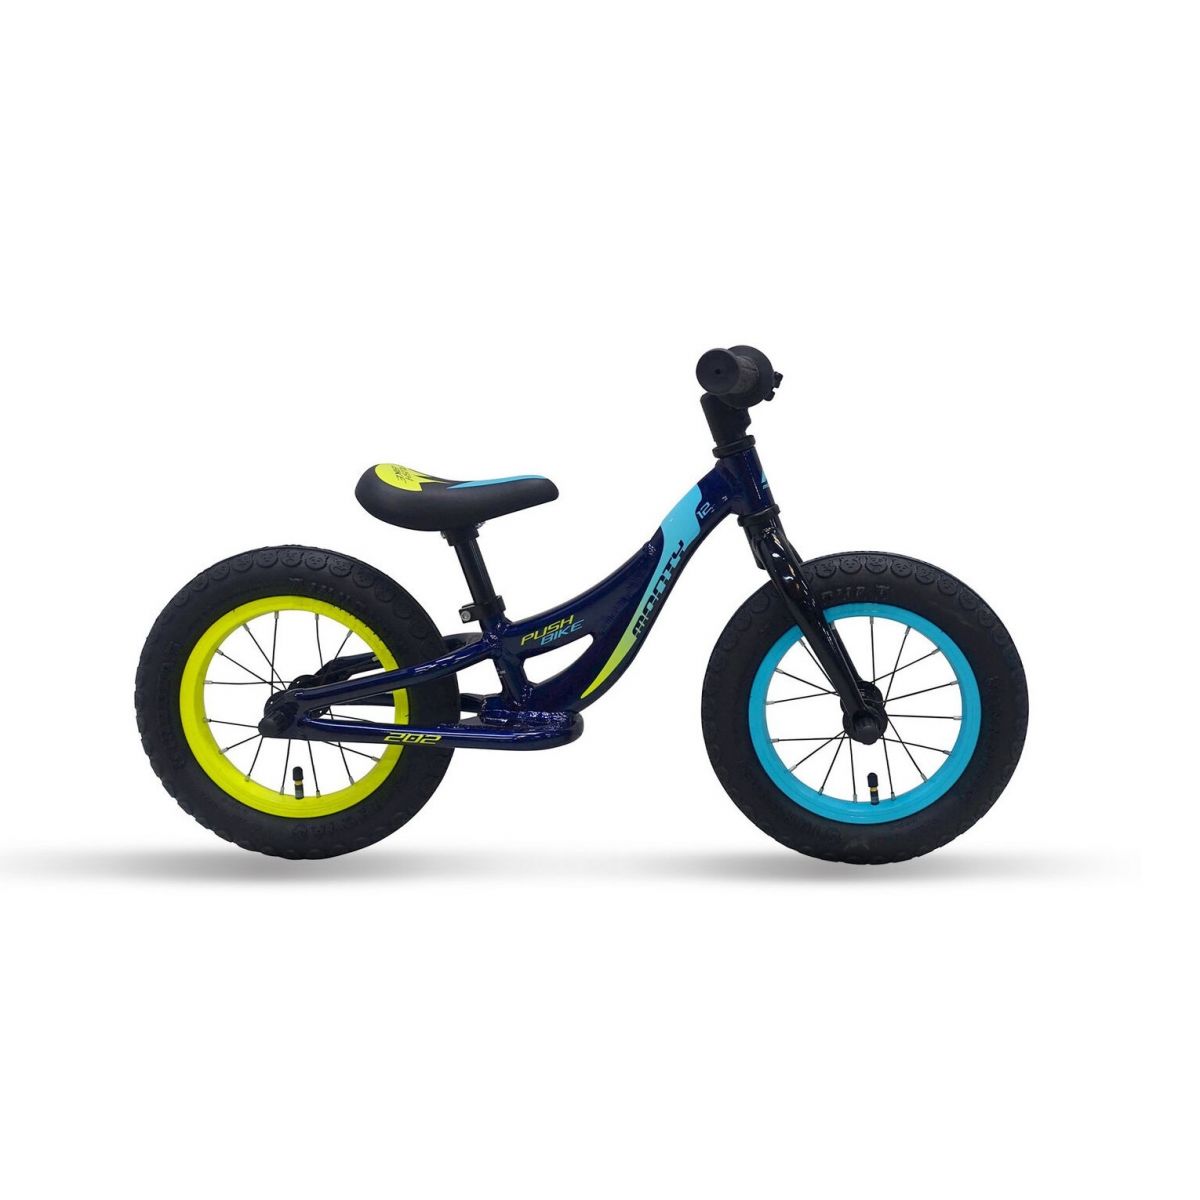 Bicileta para niños Monty 202 push bike color azul